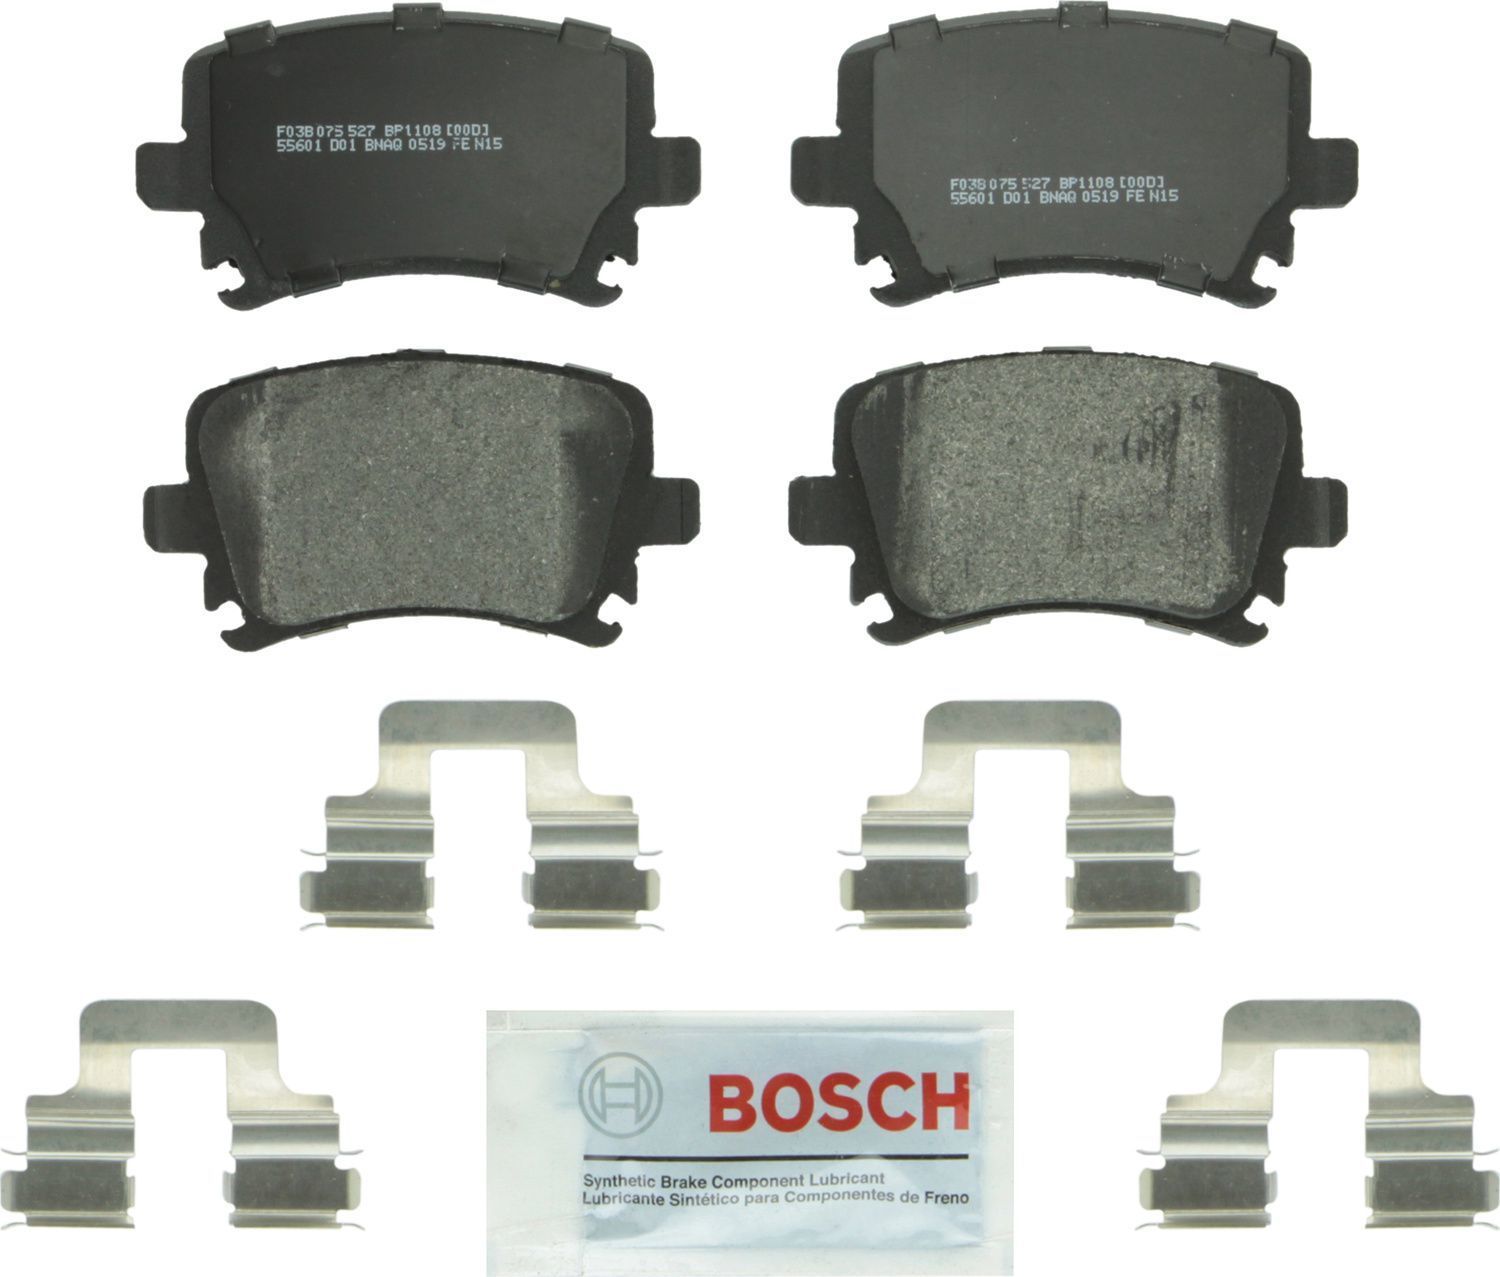 BOSCH BRAKE - Bosch QuietCast Semi-Metallic Brake Pads (Rear) - BQC BP1108